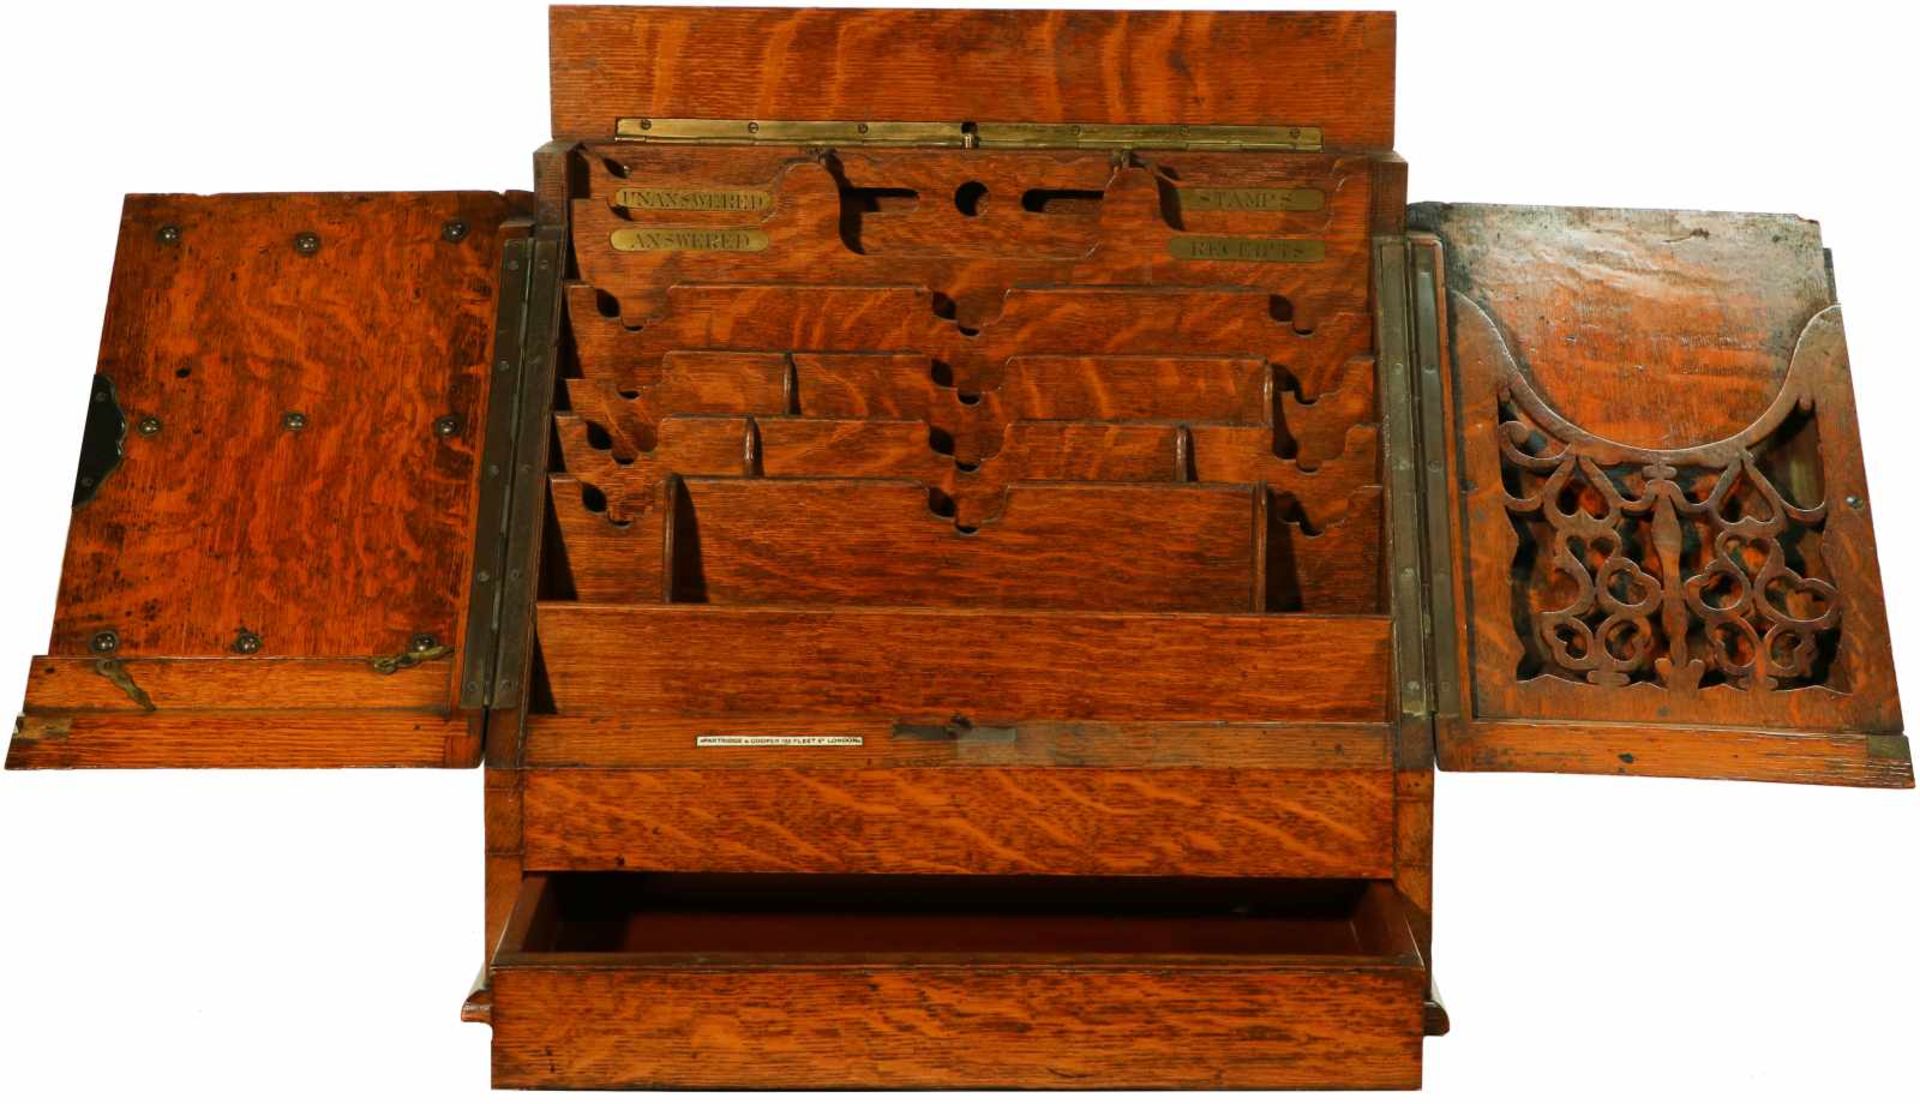 An oak 'Stationery Cabinet', Partridge & Cooper, 192 Fleet Street London. With secret compartment.